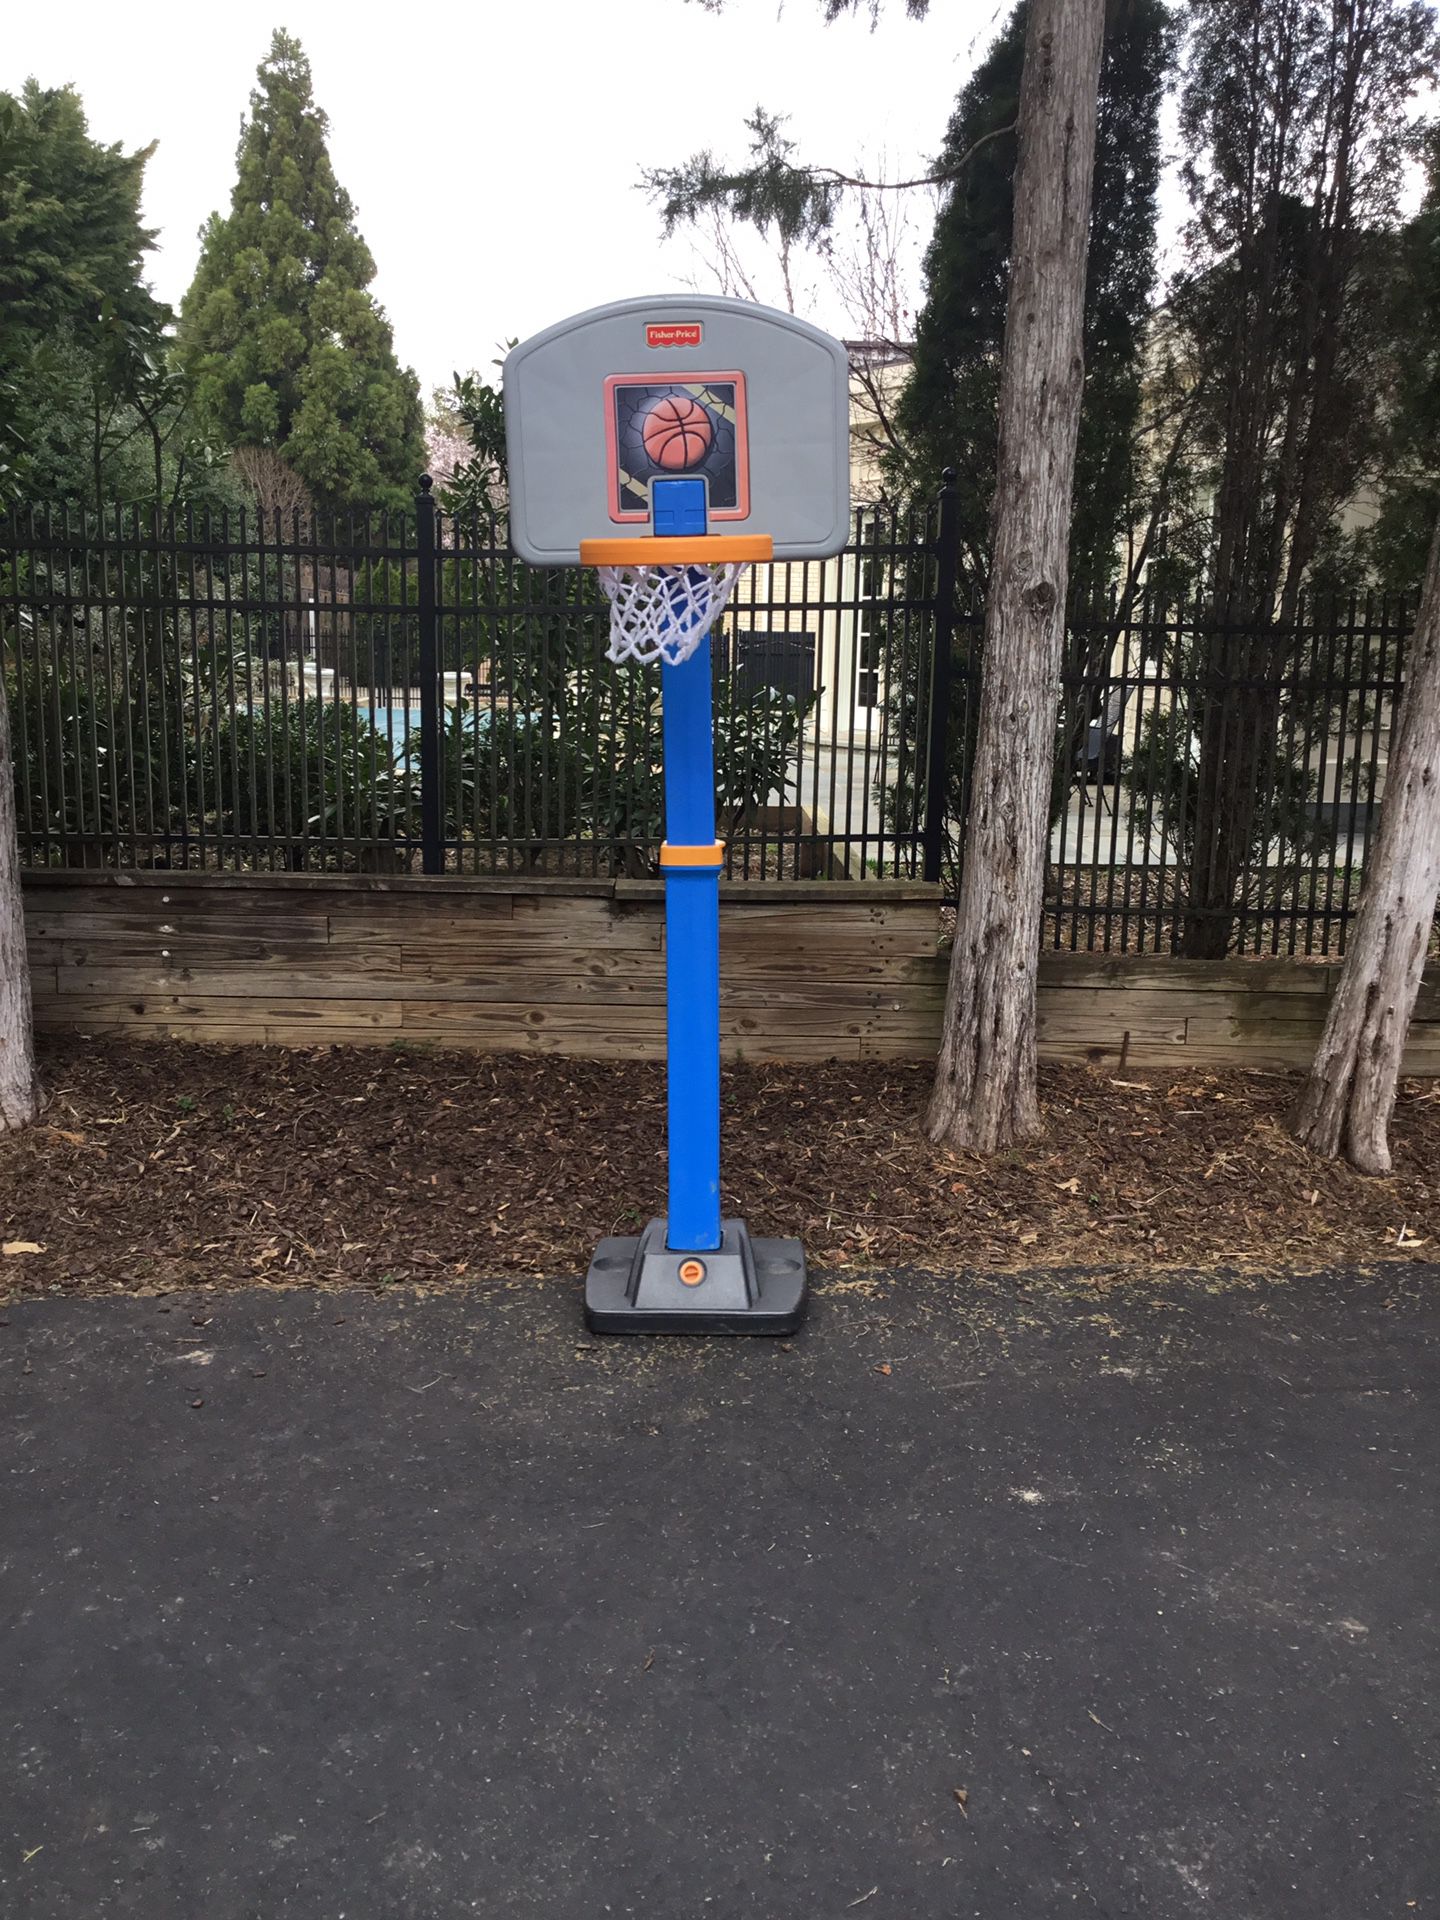 Fisher Price children’s basketball net, adjusts to 4 feet, 5 feet or 6 feet